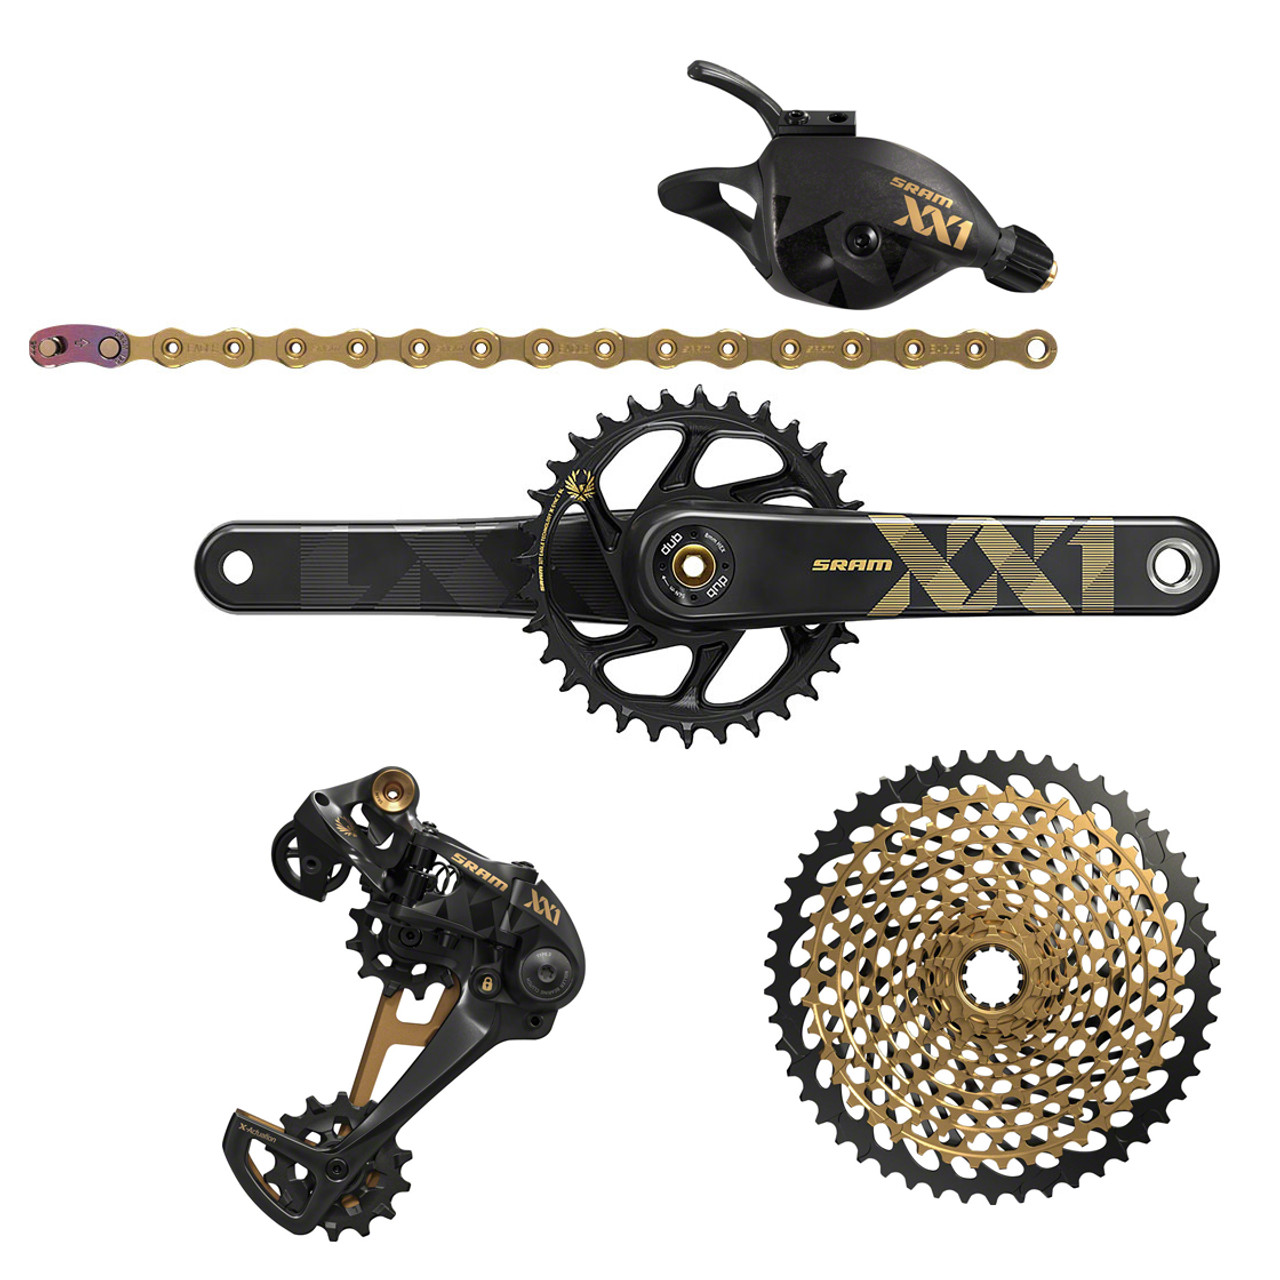 Geschatte Laatste Flikkeren Texas Cyclesport SRAM XX1 Eagle DUB Sync 2 Carbon Crankset, Black & Gold |  XX1 Drive Train Trigger Shifter Upgrade Kit, Black & Gold SRM-XX1DB-XX1-EGL-UP-TR2-GLD  1414.99 New